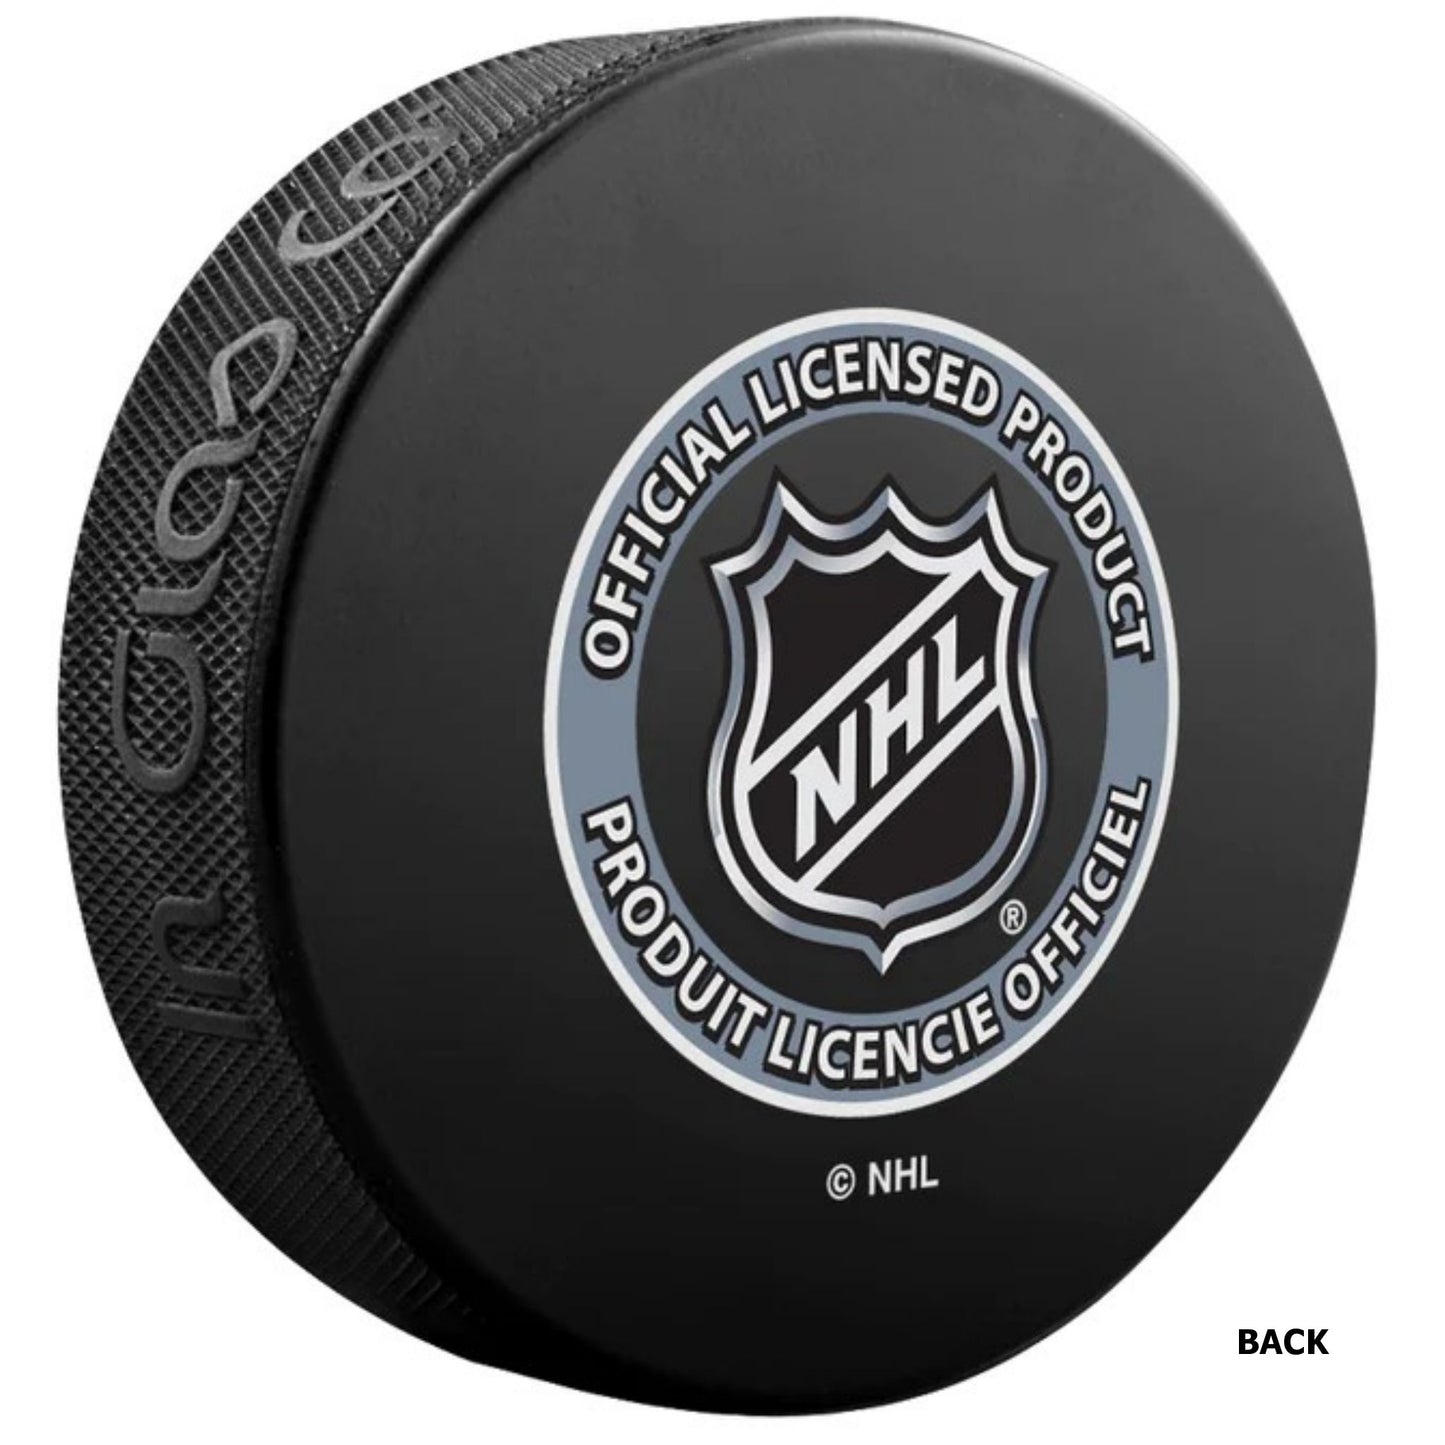 Ottawa Senators Throwback Logo Retro Series Collectible Hockey Puck